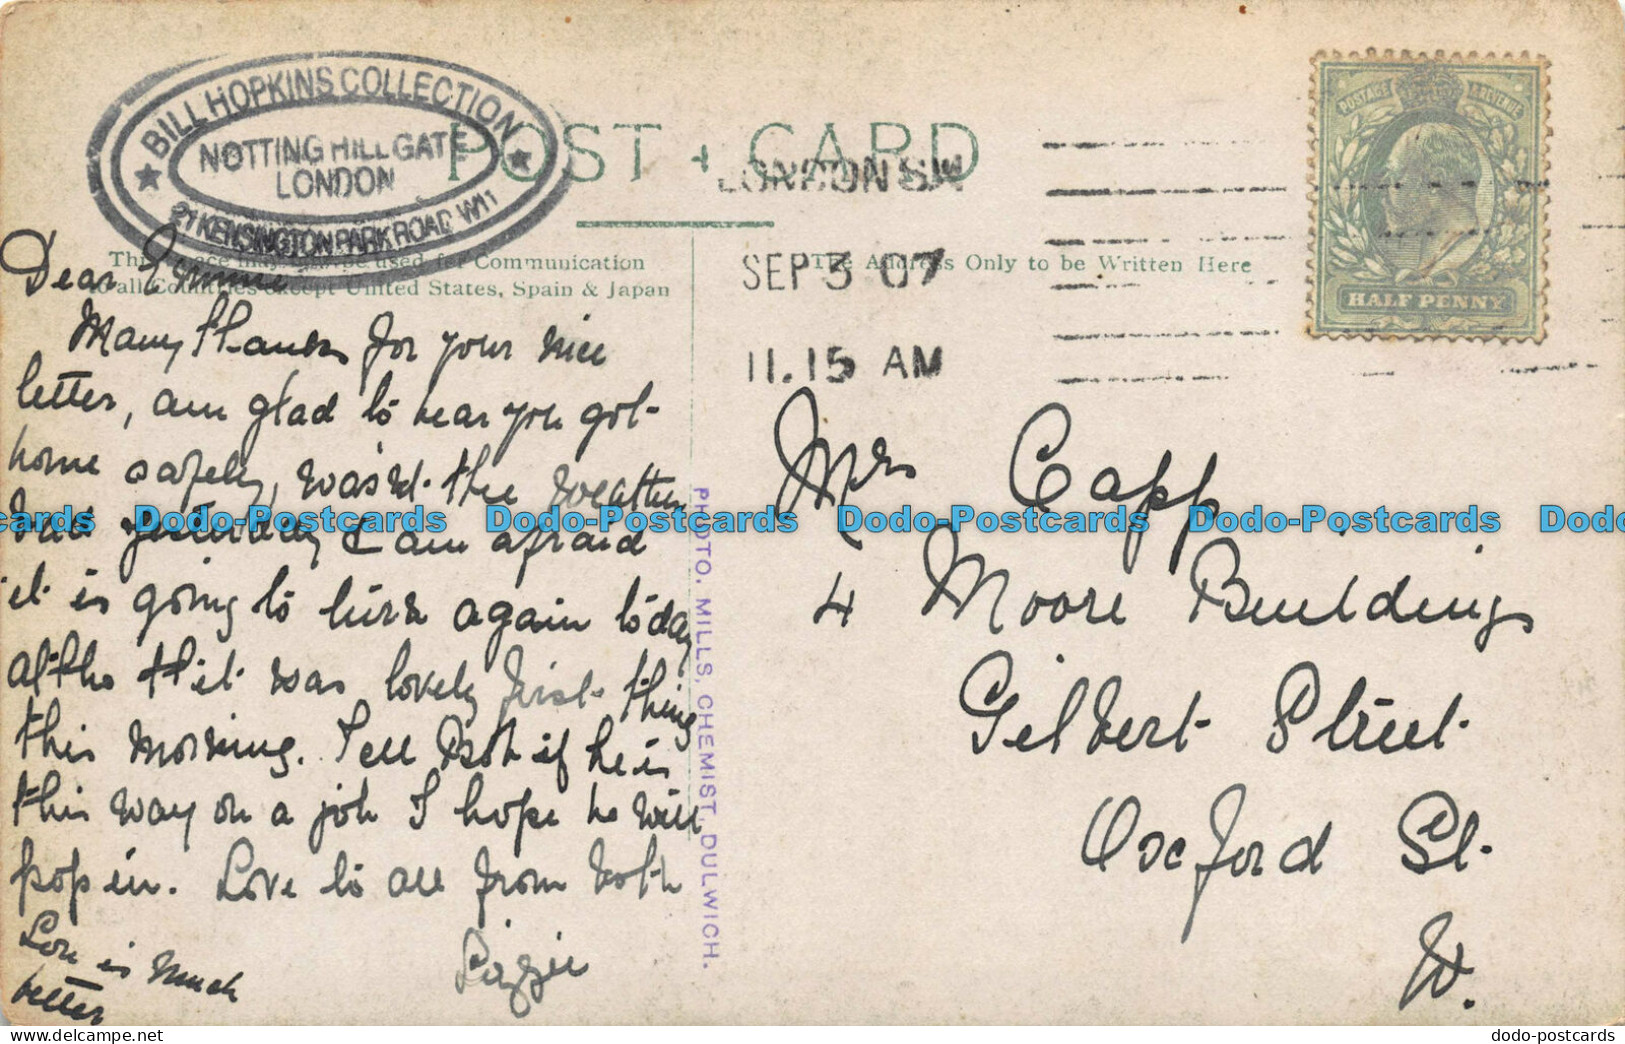 R106028 Old Postcard. House. Mills. 1907. B. Hopkins - Welt